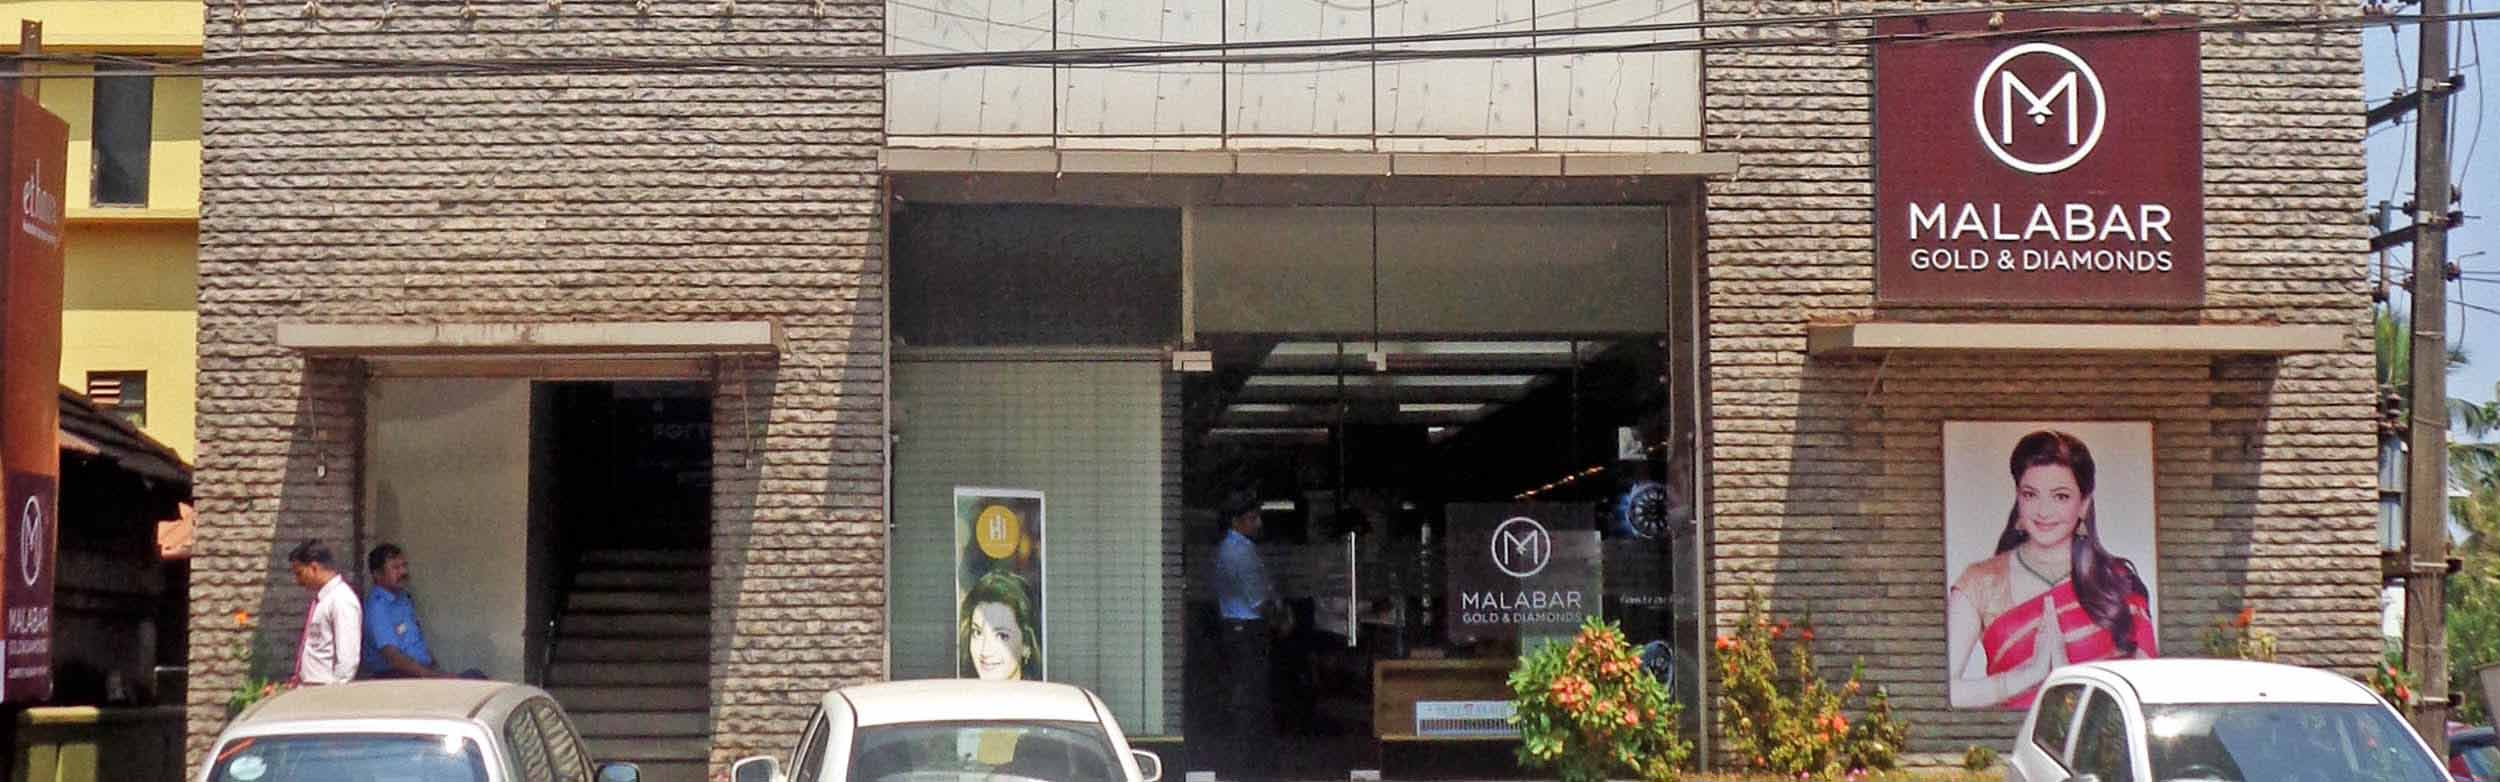 Malabar Gold & Diamonds Stores in Manjeri, Kerala